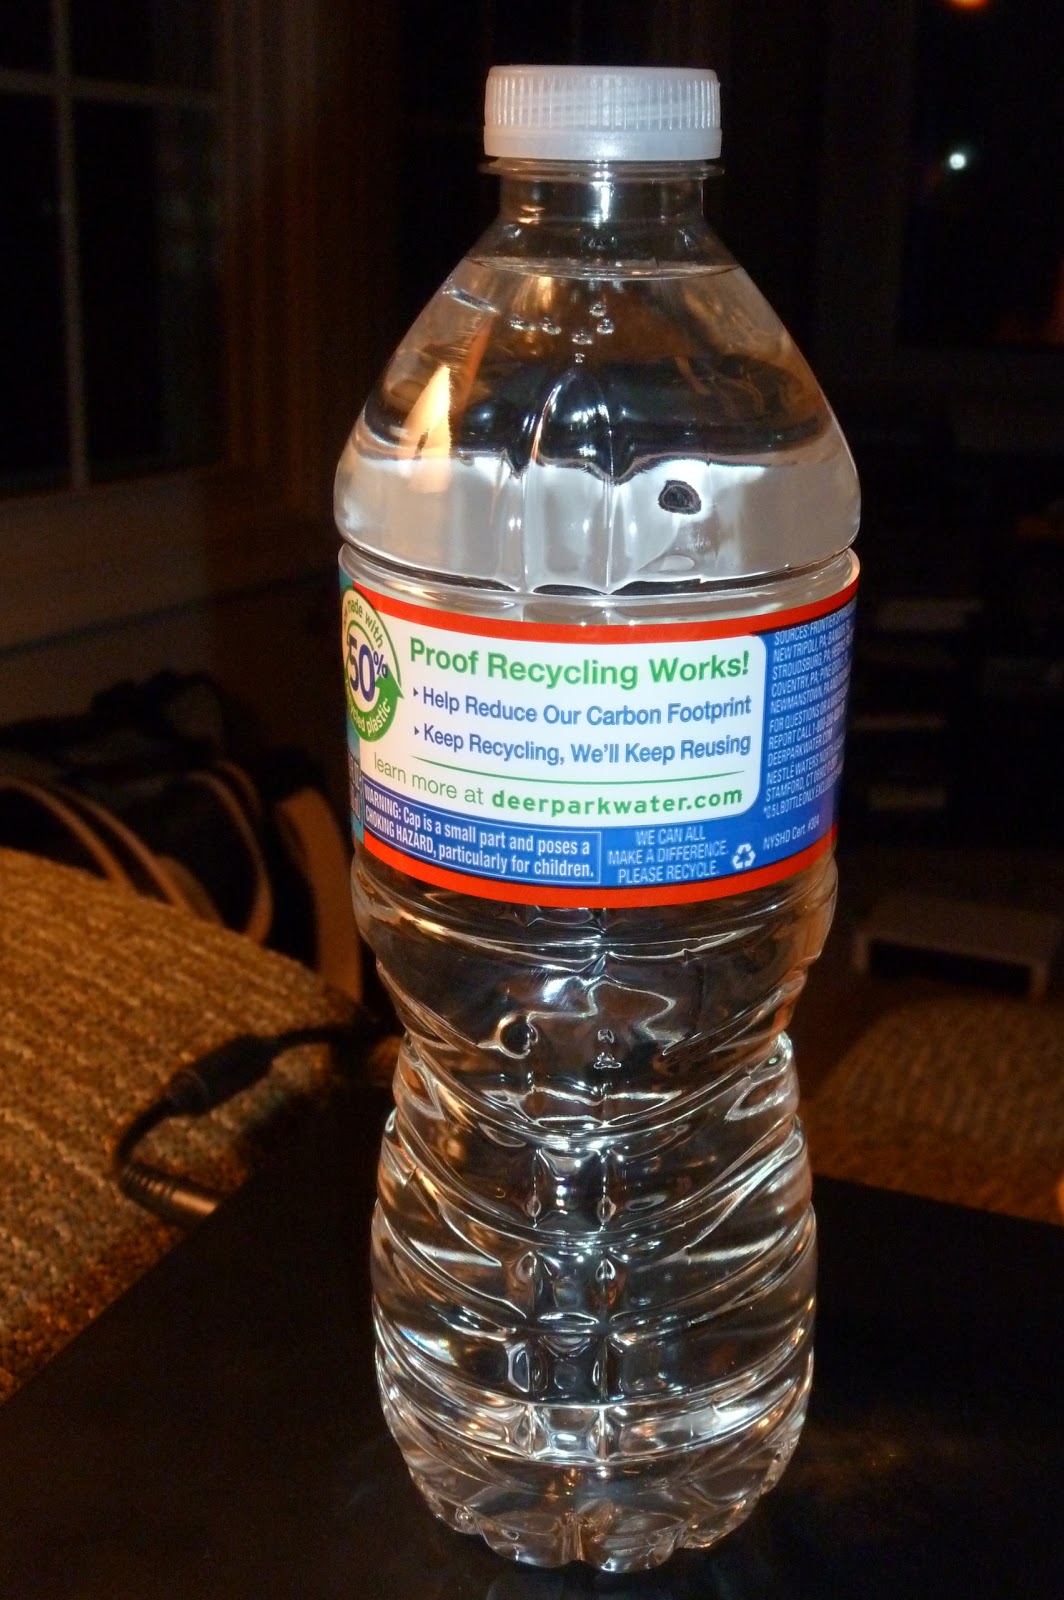 http://1.bp.blogspot.com/-8egw4sM7rqI/TnLEQX7htuI/AAAAAAAAAQU/dyK0pq3636c/s1600/Bottled+Water.jpg